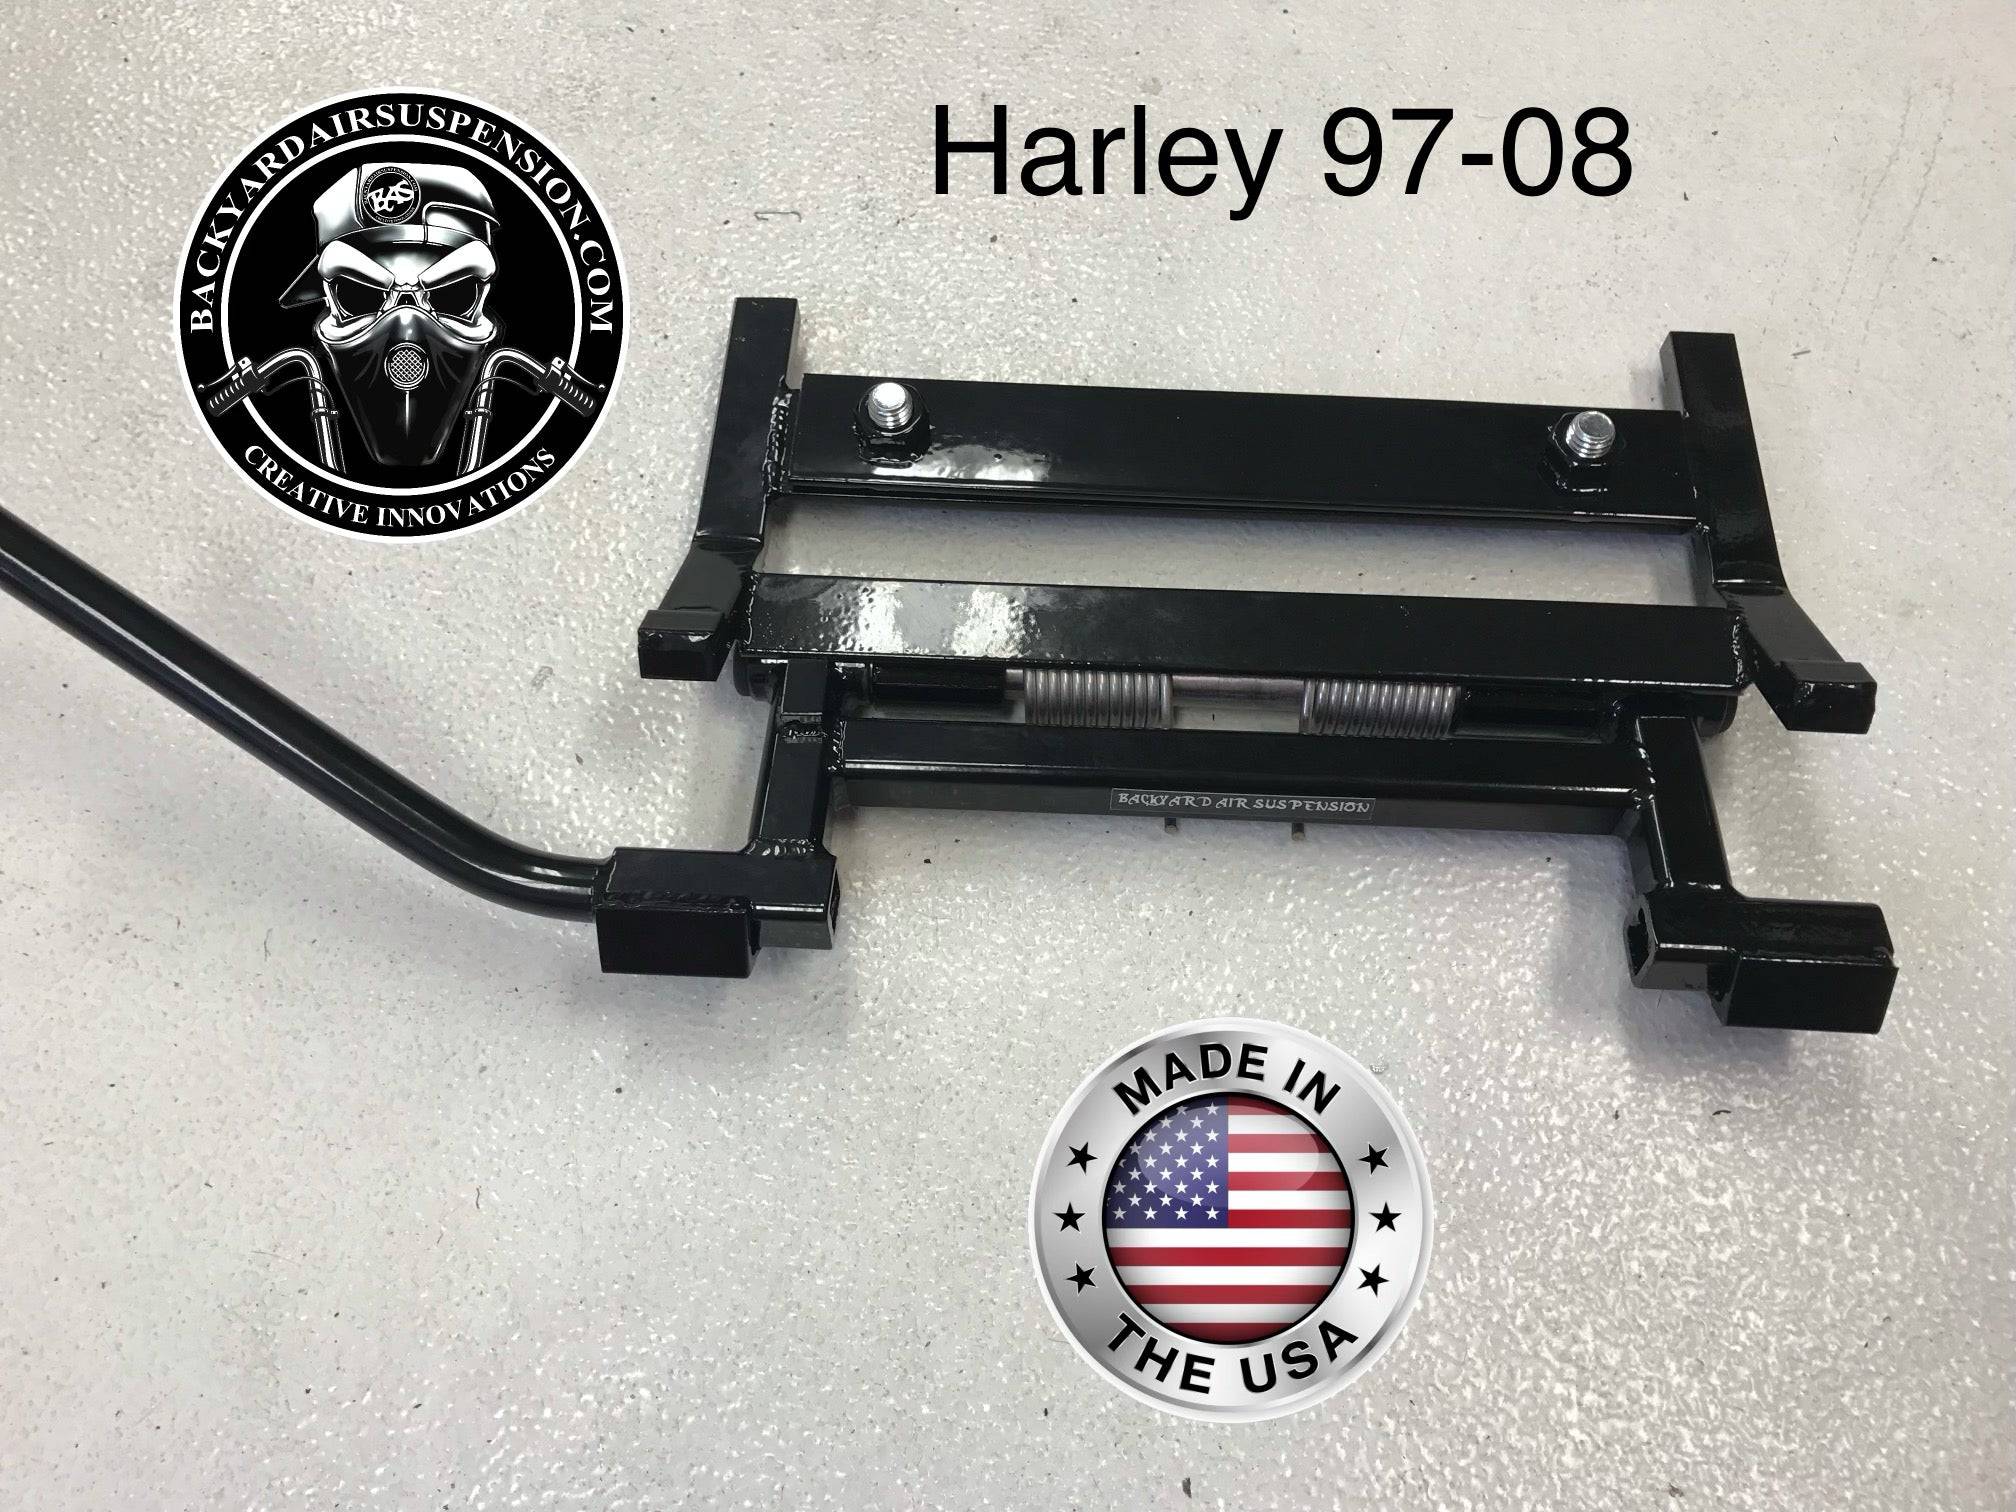 Harley 97-08 Manual Center Stand - Backyard Air Suspension & Innovations, LLC.